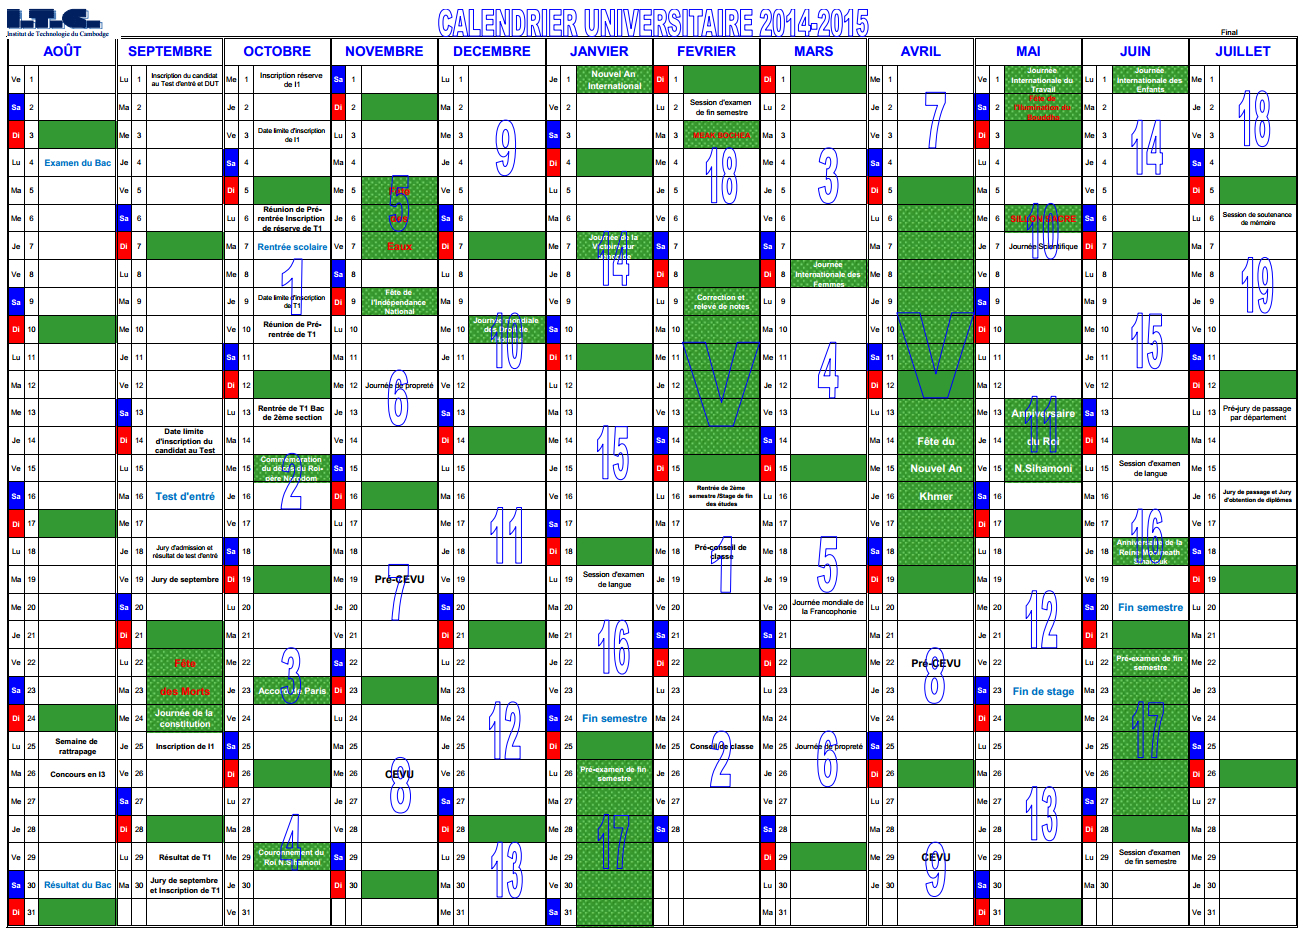 Khmer Calendar 2016 | Calendar For Planning with regard to Swerteng Kulay Ng Manok Calendar